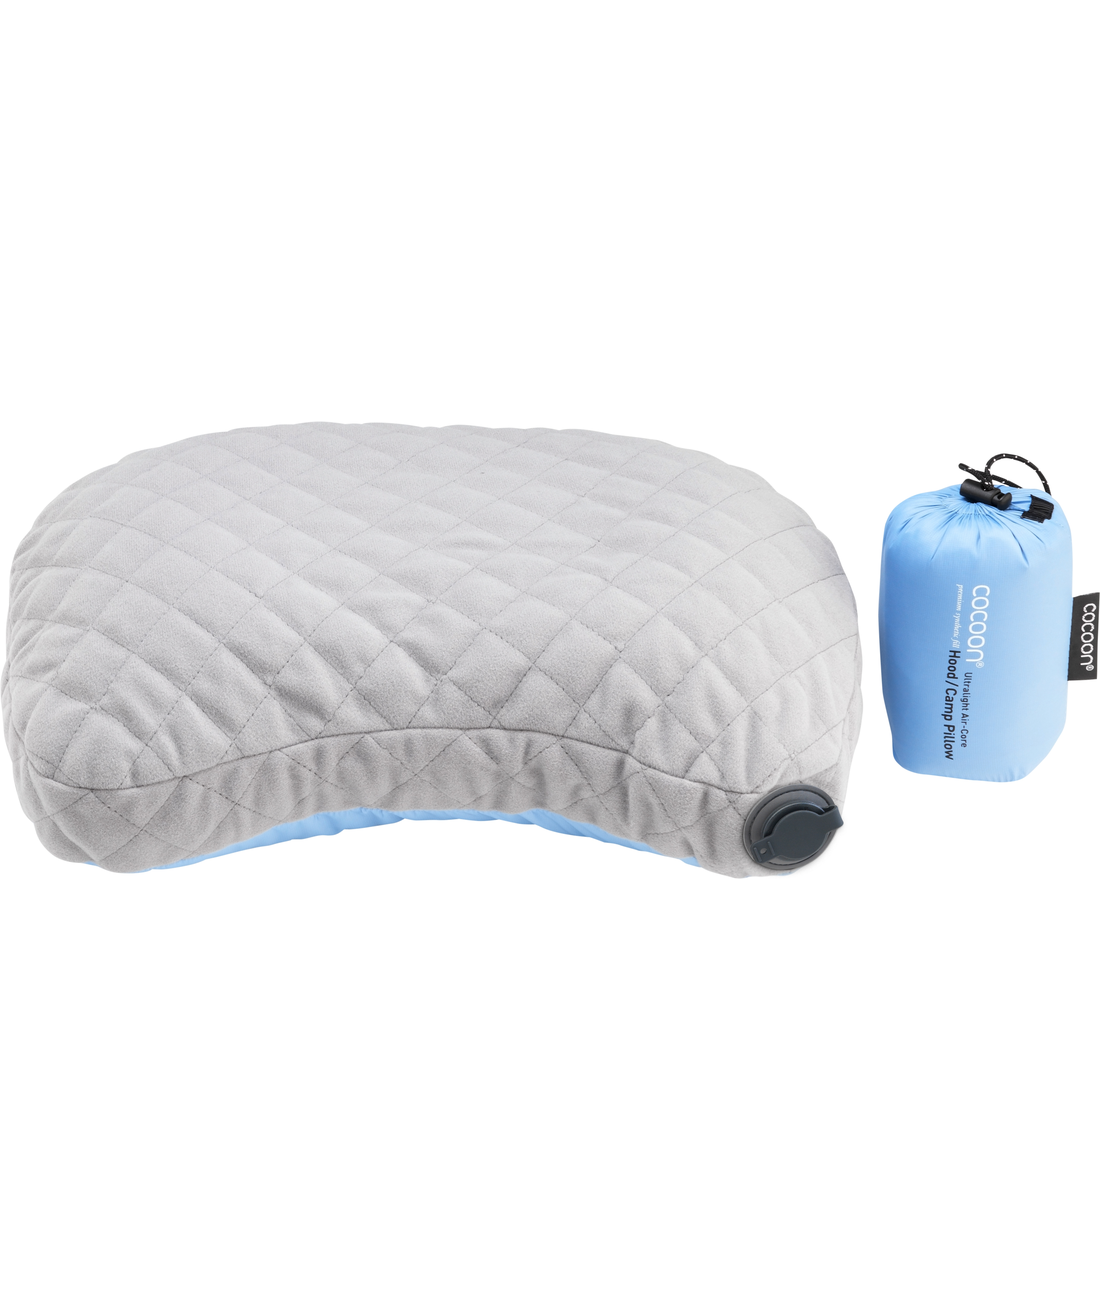 Air-Core Hood / Camp Pillow